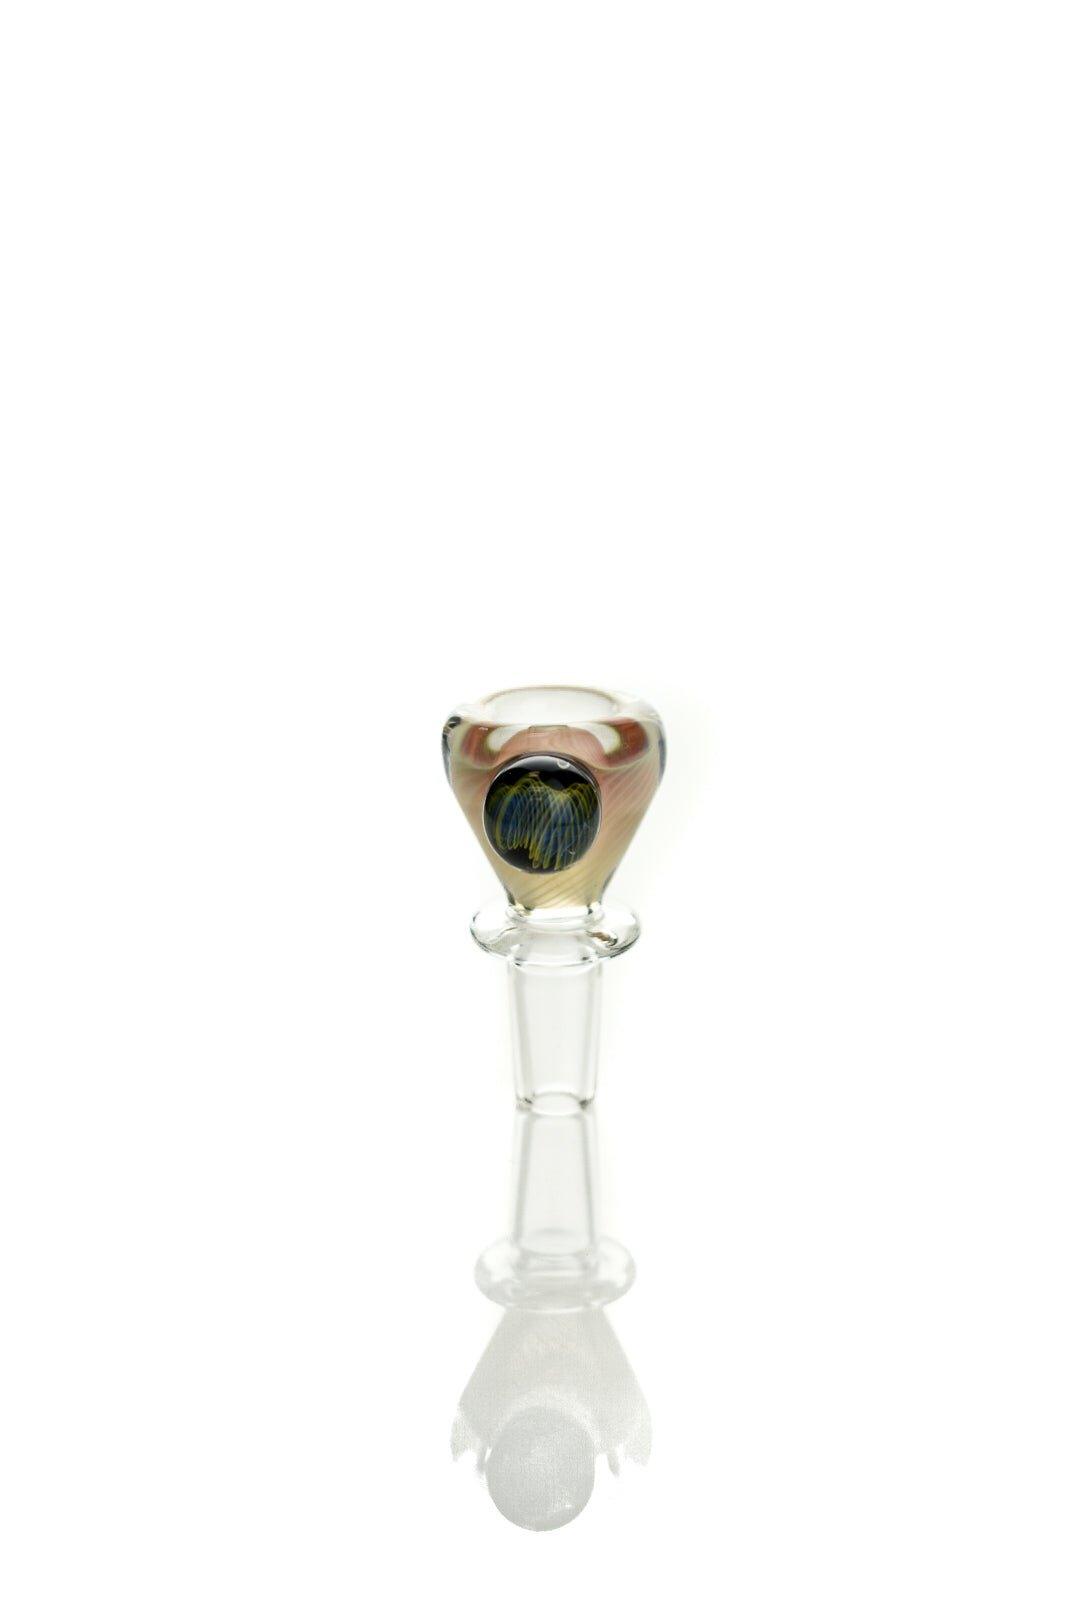 Fumed With Opal Dry Herb Slide Made By Joe Madigan - Smoke Spot Smoke Shop